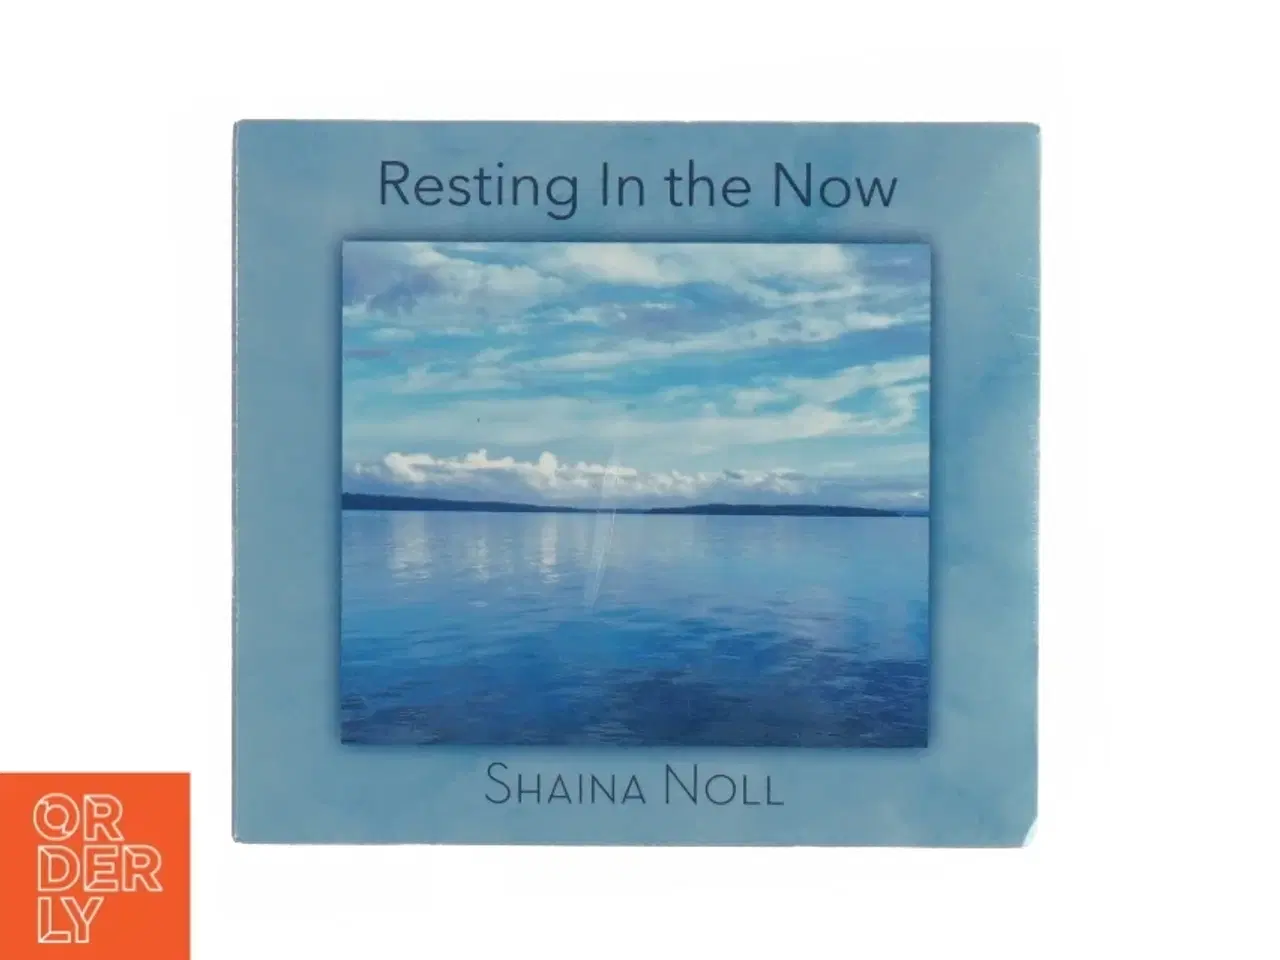 Billede 1 - Resting in the now cd